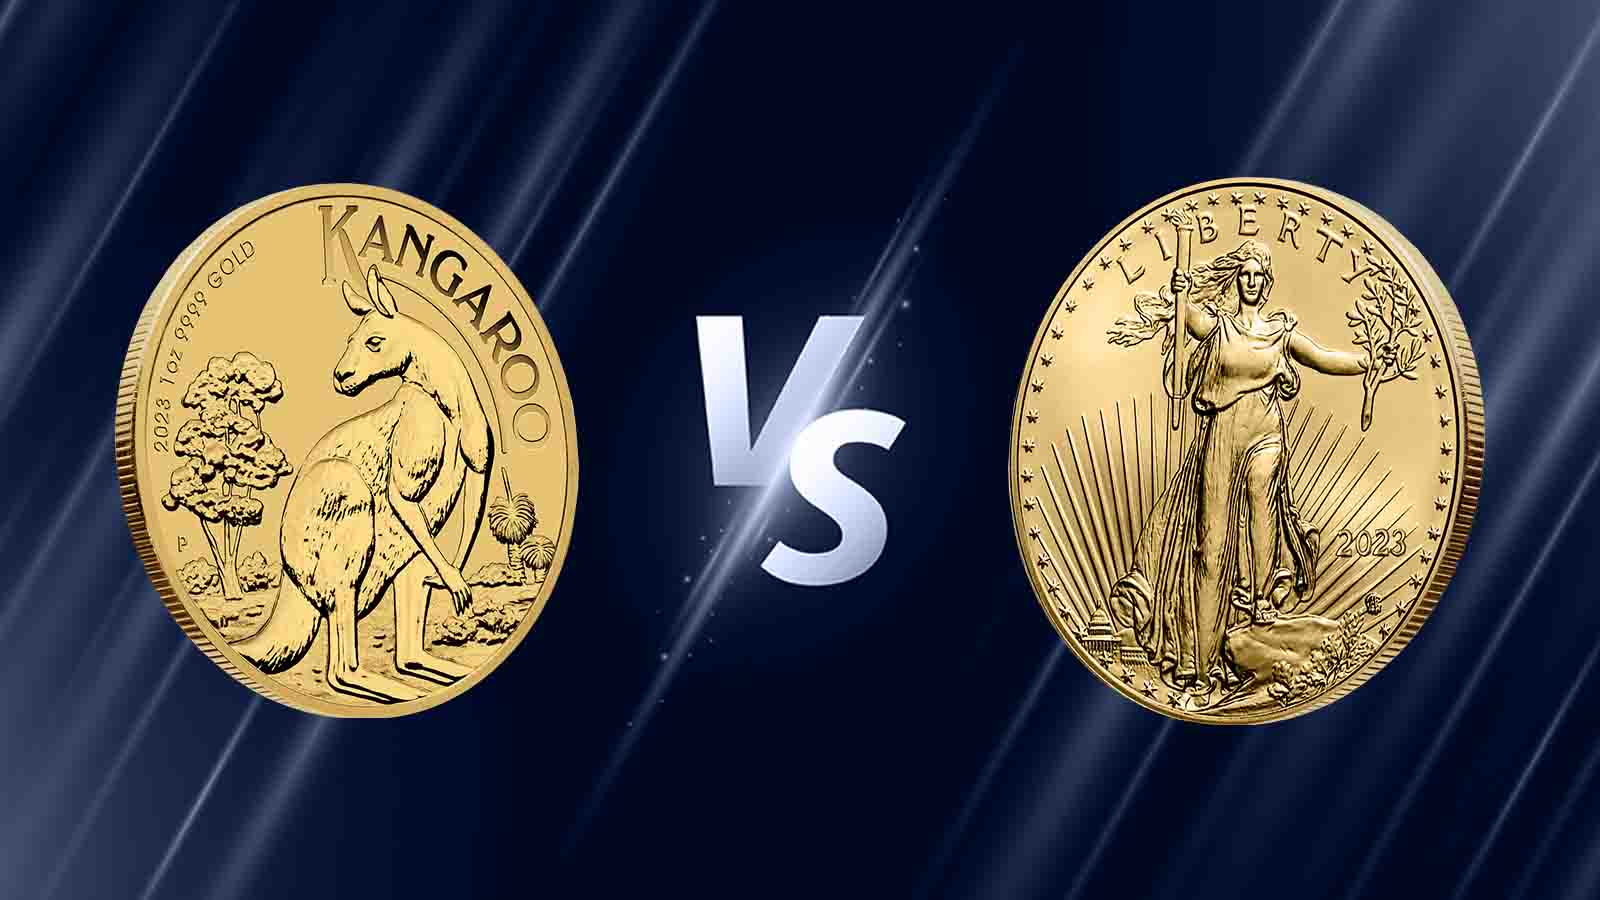 Gold Kangaroo and Gold Eagles coins.